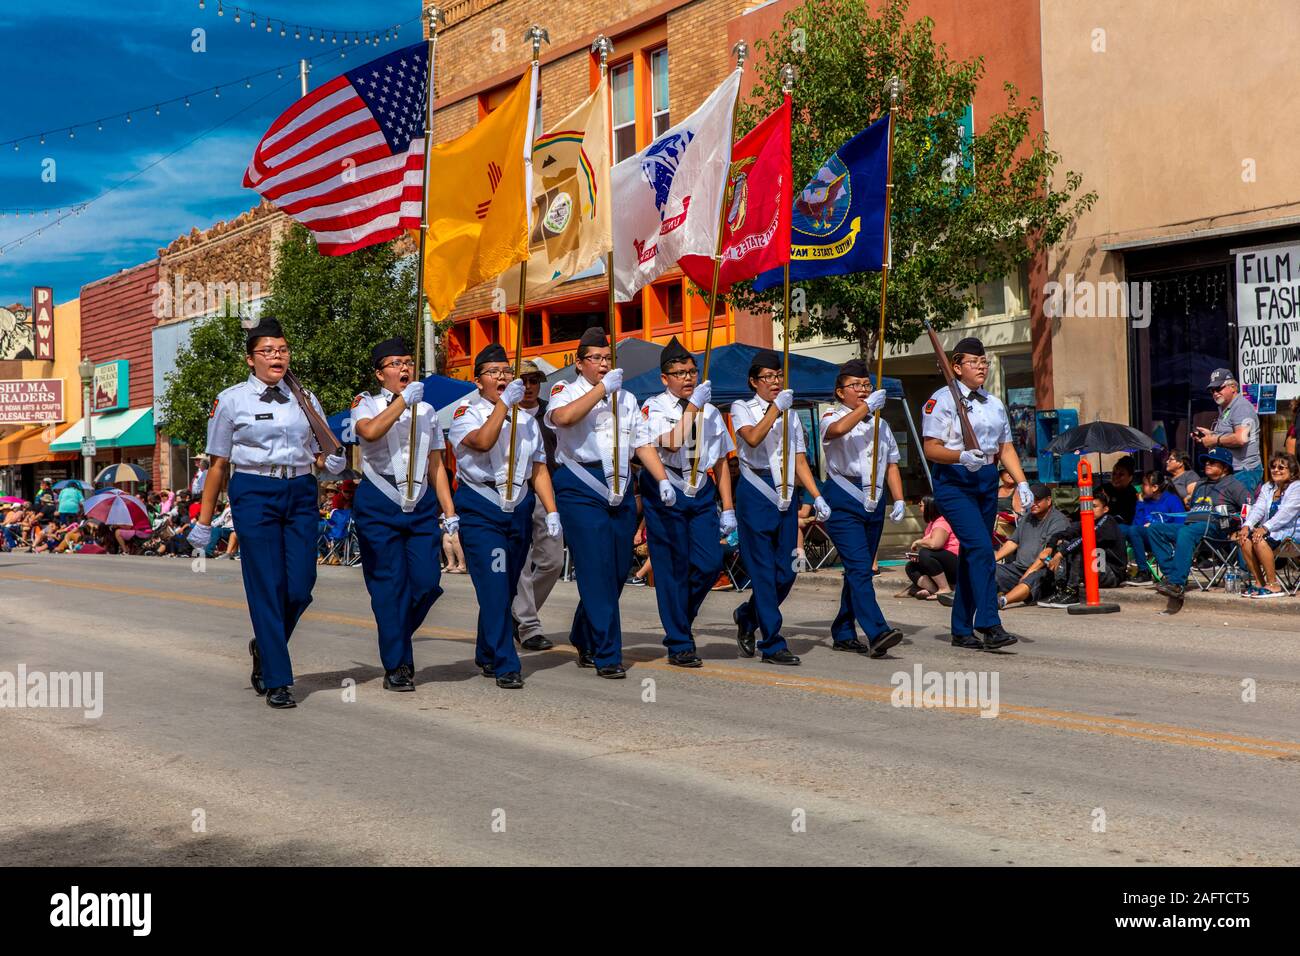 AUGUST 10, 2019 - Gallup, New Mexico, USA - Porträts der gebürtigen Amerikaner & Navajo am 98th Gallup Inter-tribal Indian Ceremonial, New Mexico Stockfoto